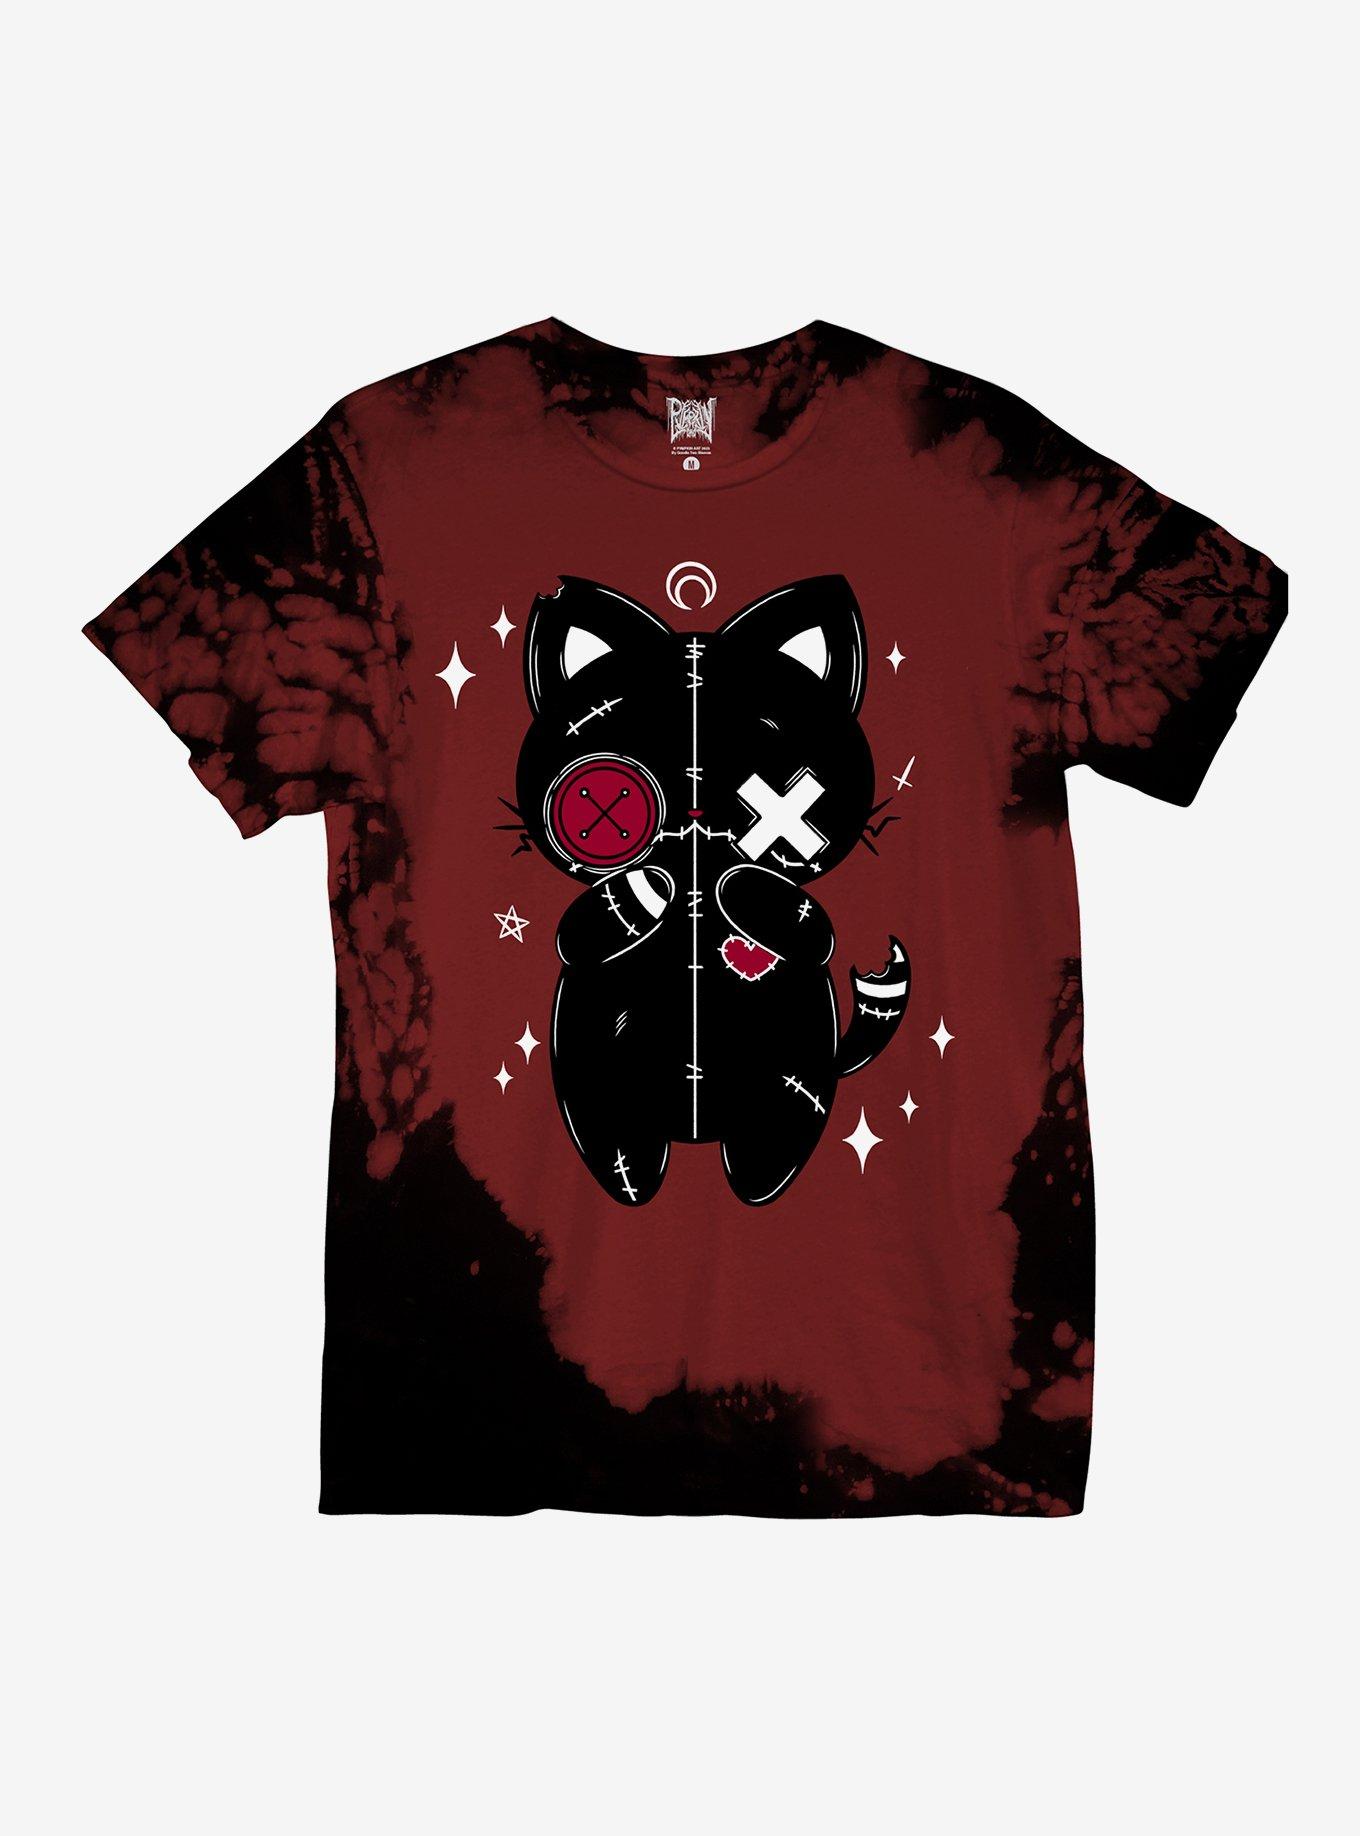 Stitched Cat Tie-Dye Boyfriend Fit Girls T-Shirt By Pvmpkin Art | Hot Topic